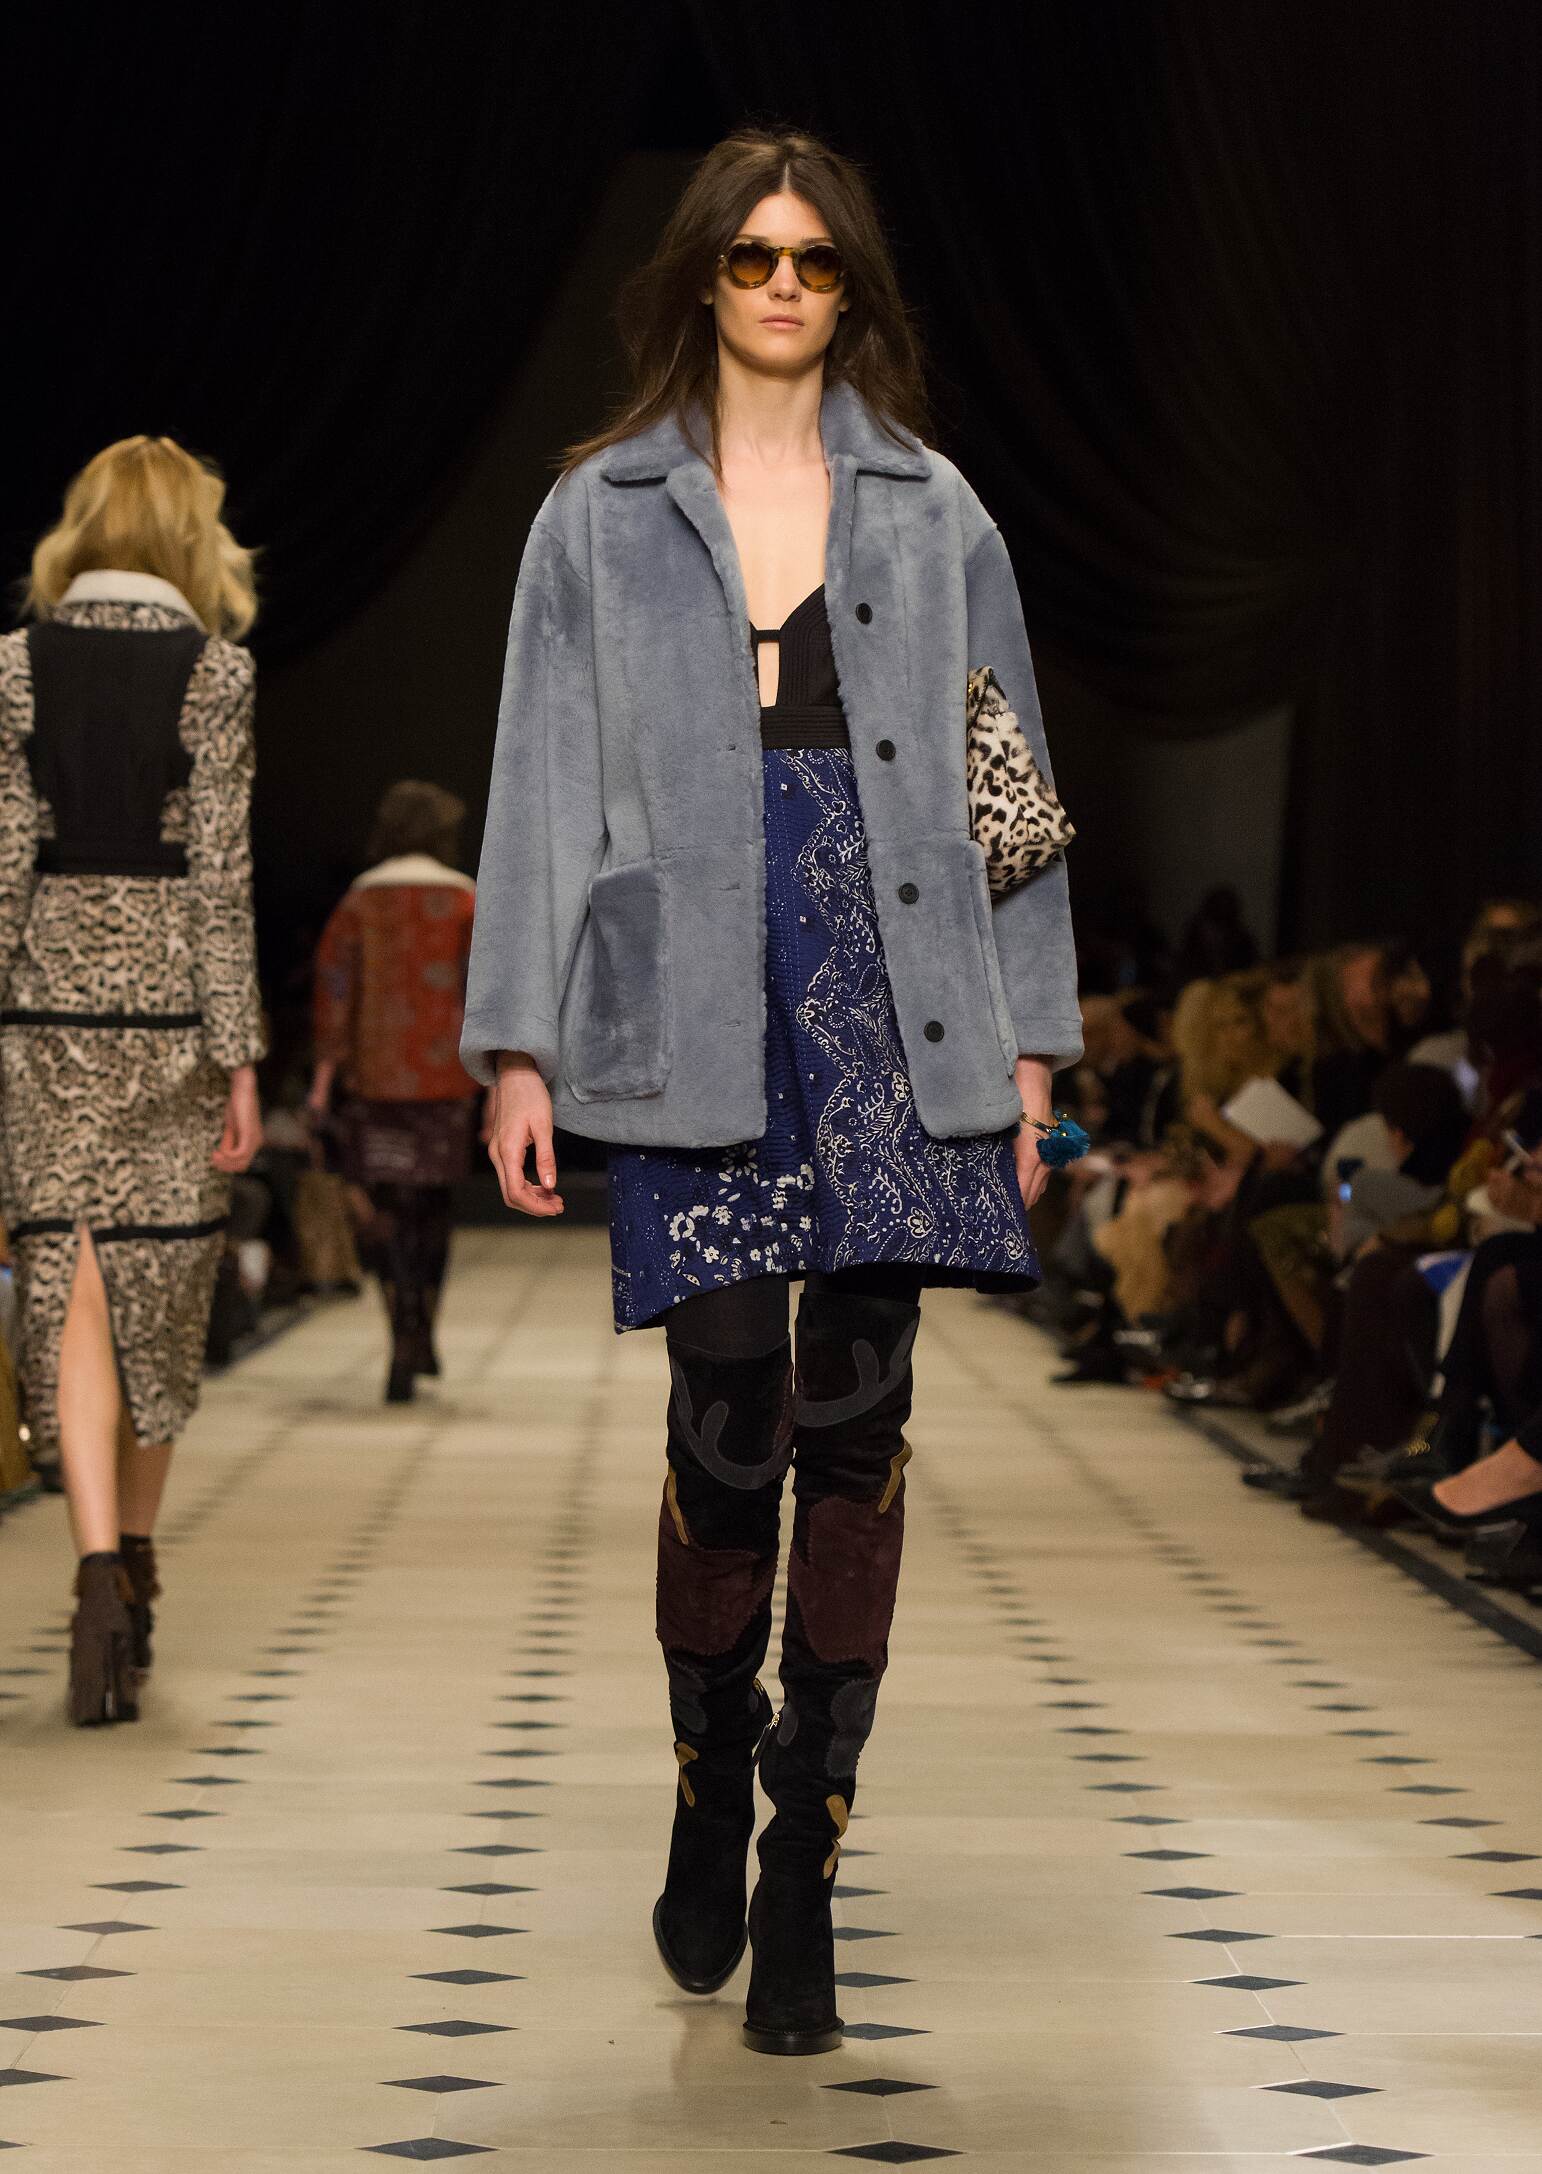 Catwalk Burberry Prorsum Fall Winter 2015 16 Women's Collection London Fashion Week